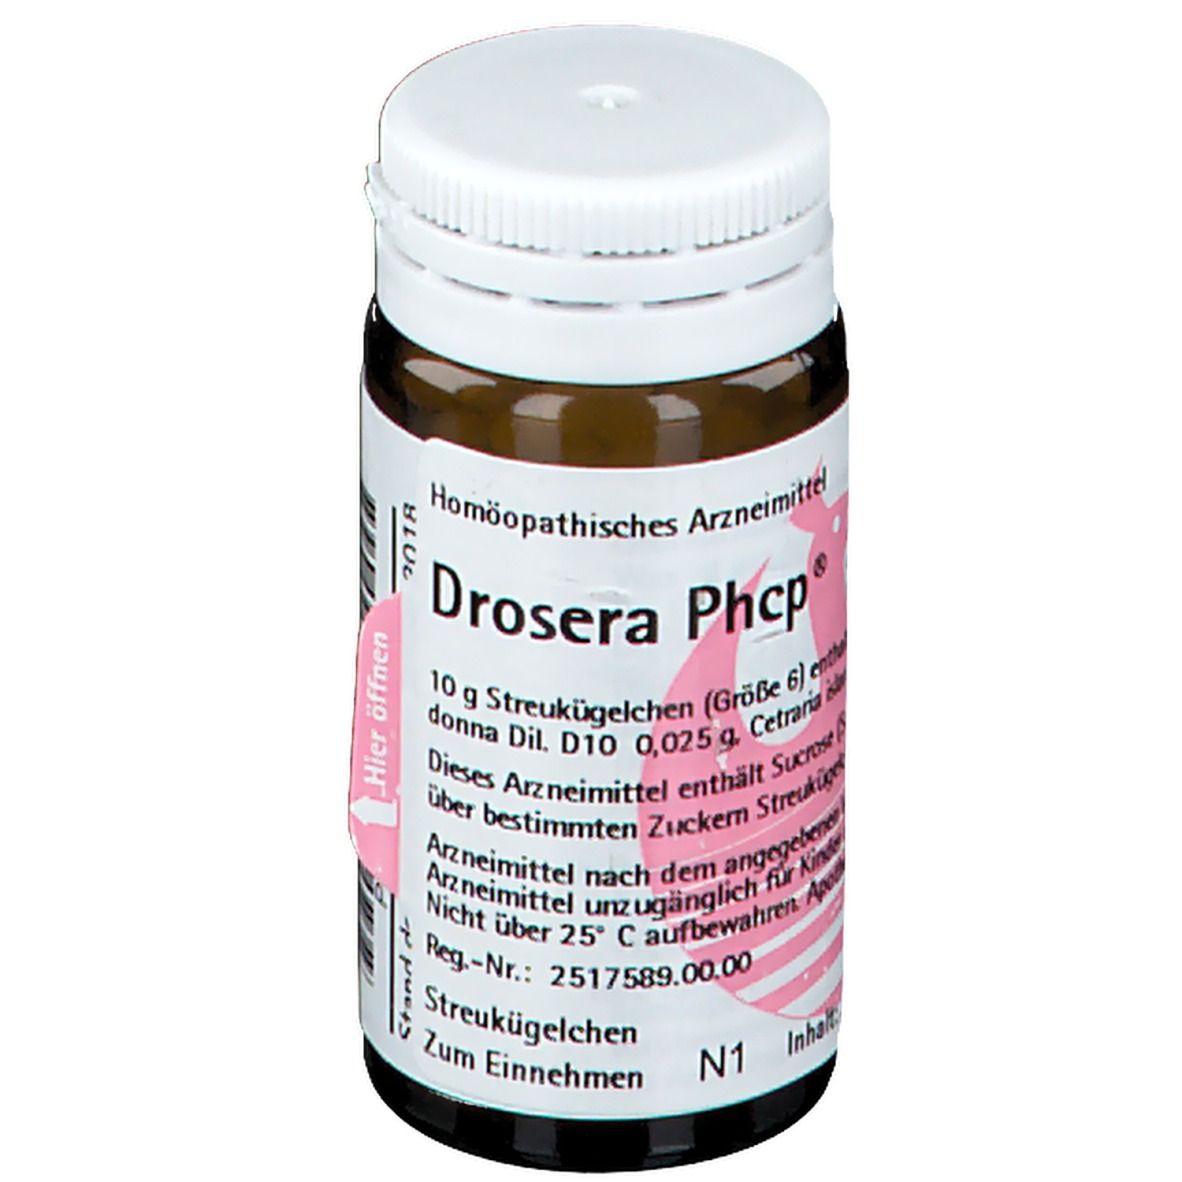 Drosera Phcp®